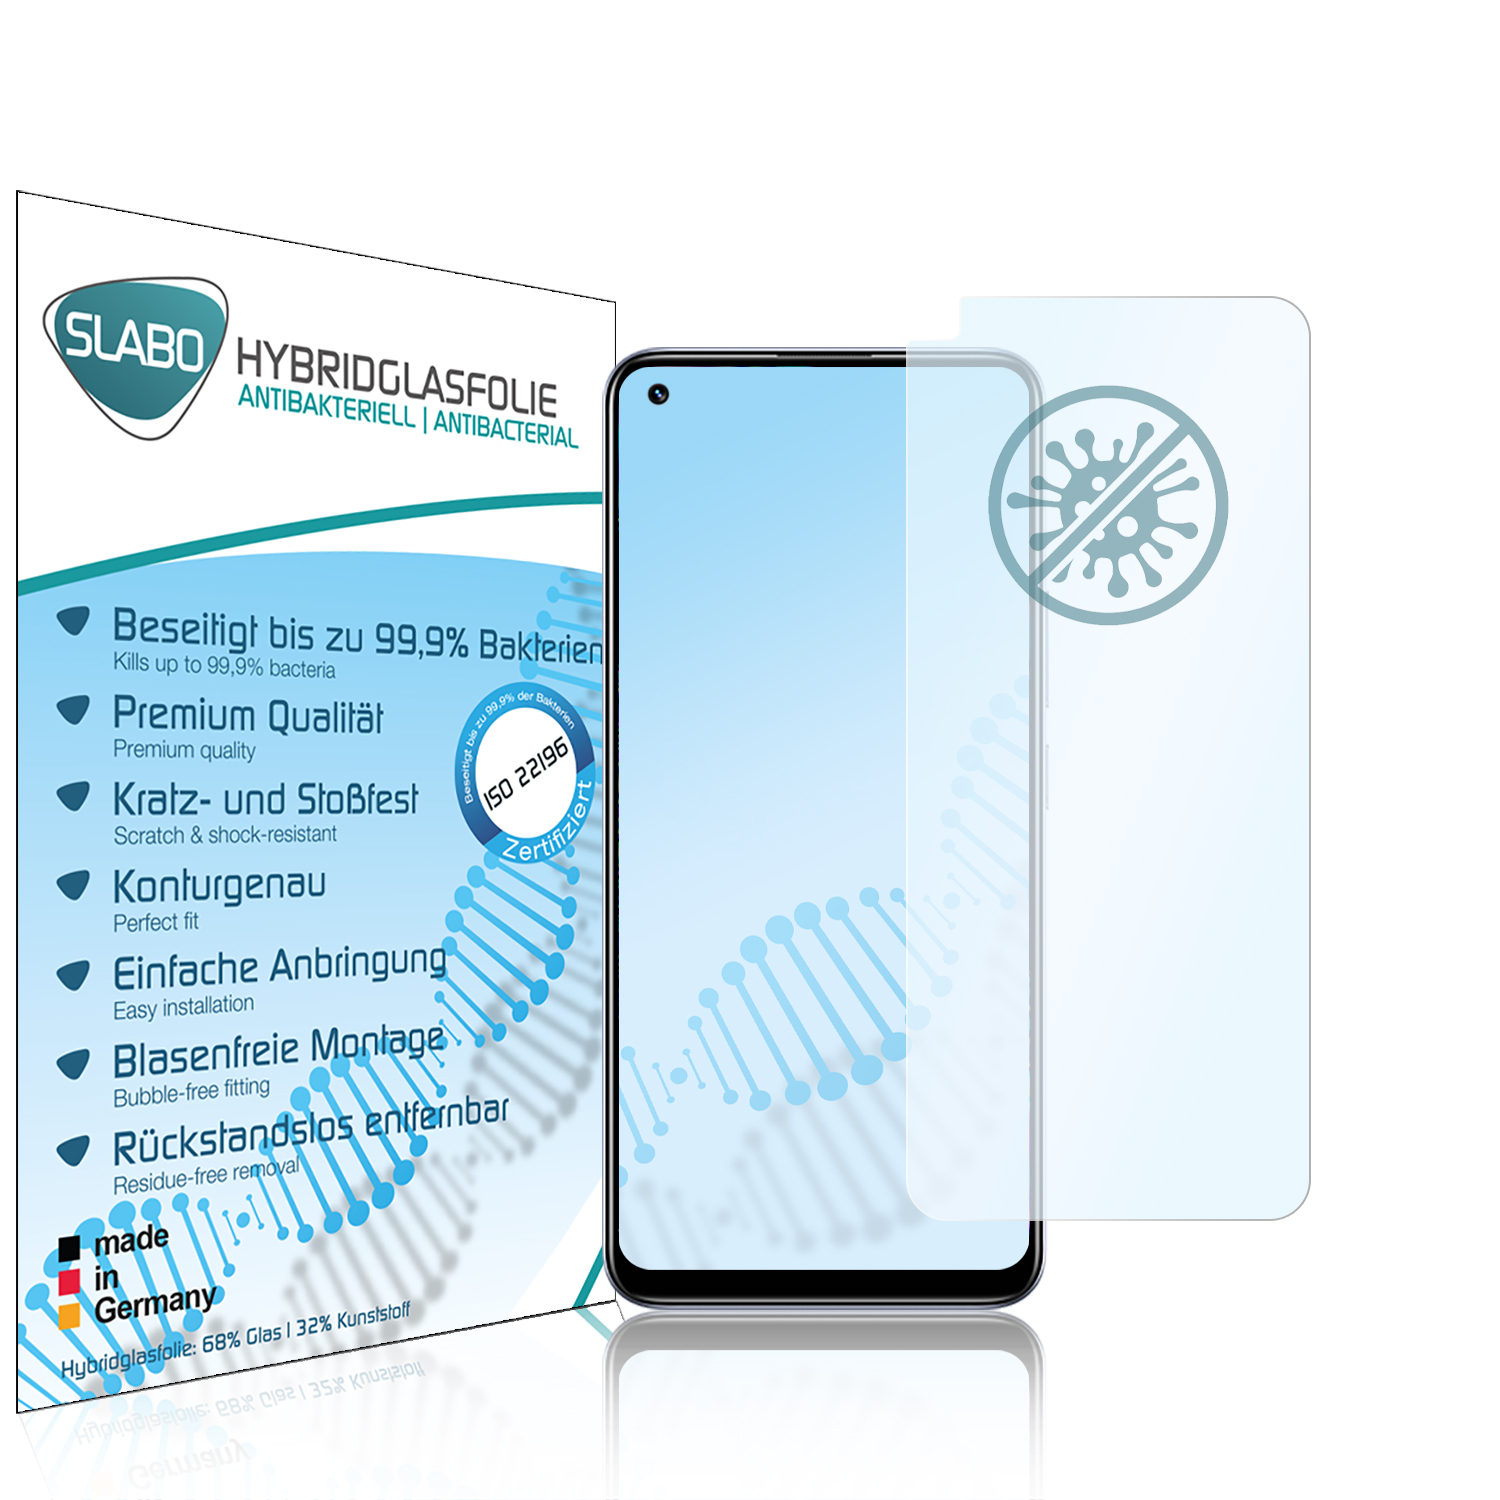 SLABO antibakteriell flexibles Hybridglas | Pro) 8 Displayschutz(für 8 Realme